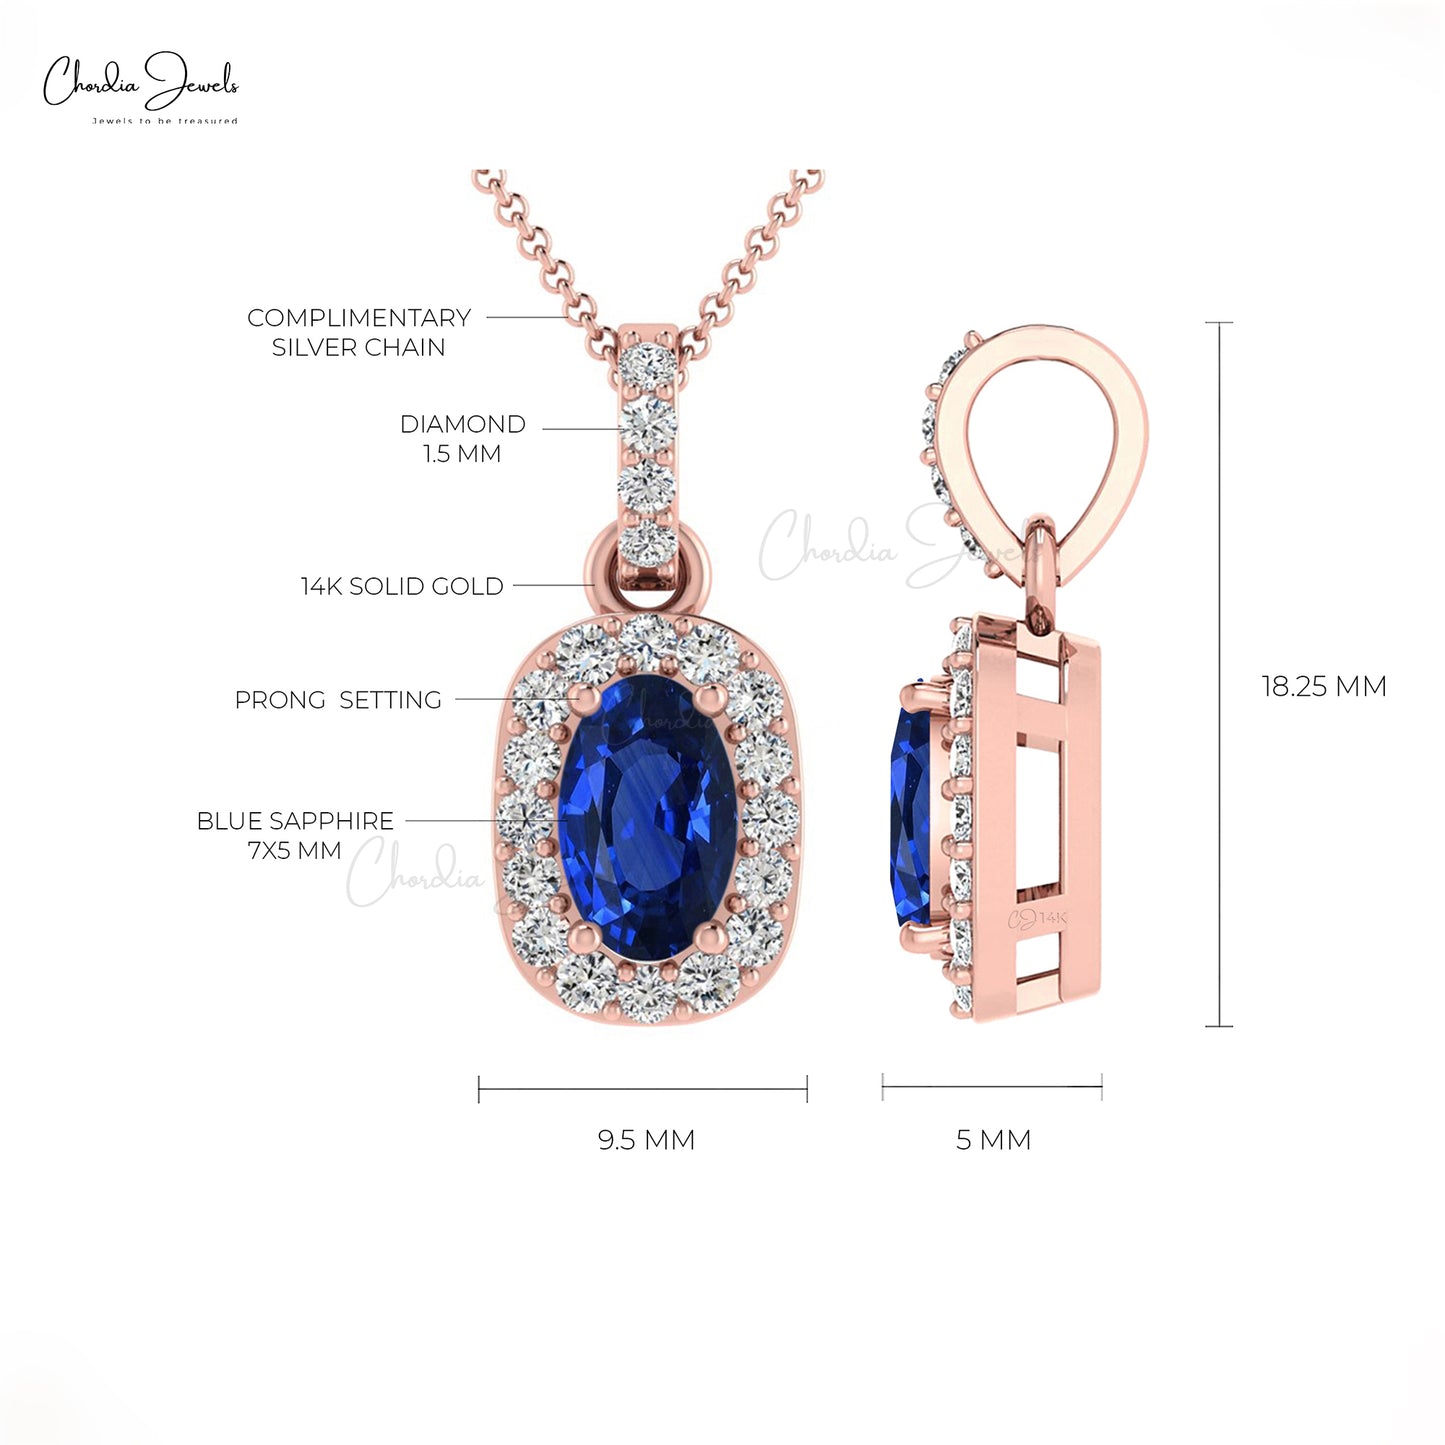 Genuine Blue Sapphire Halo Pendant For Birthday Gift 14k Real Gold Diamond Hallmarked Pendant 0.75 Ct Oval Gemstone Surprise Gift Jewelry